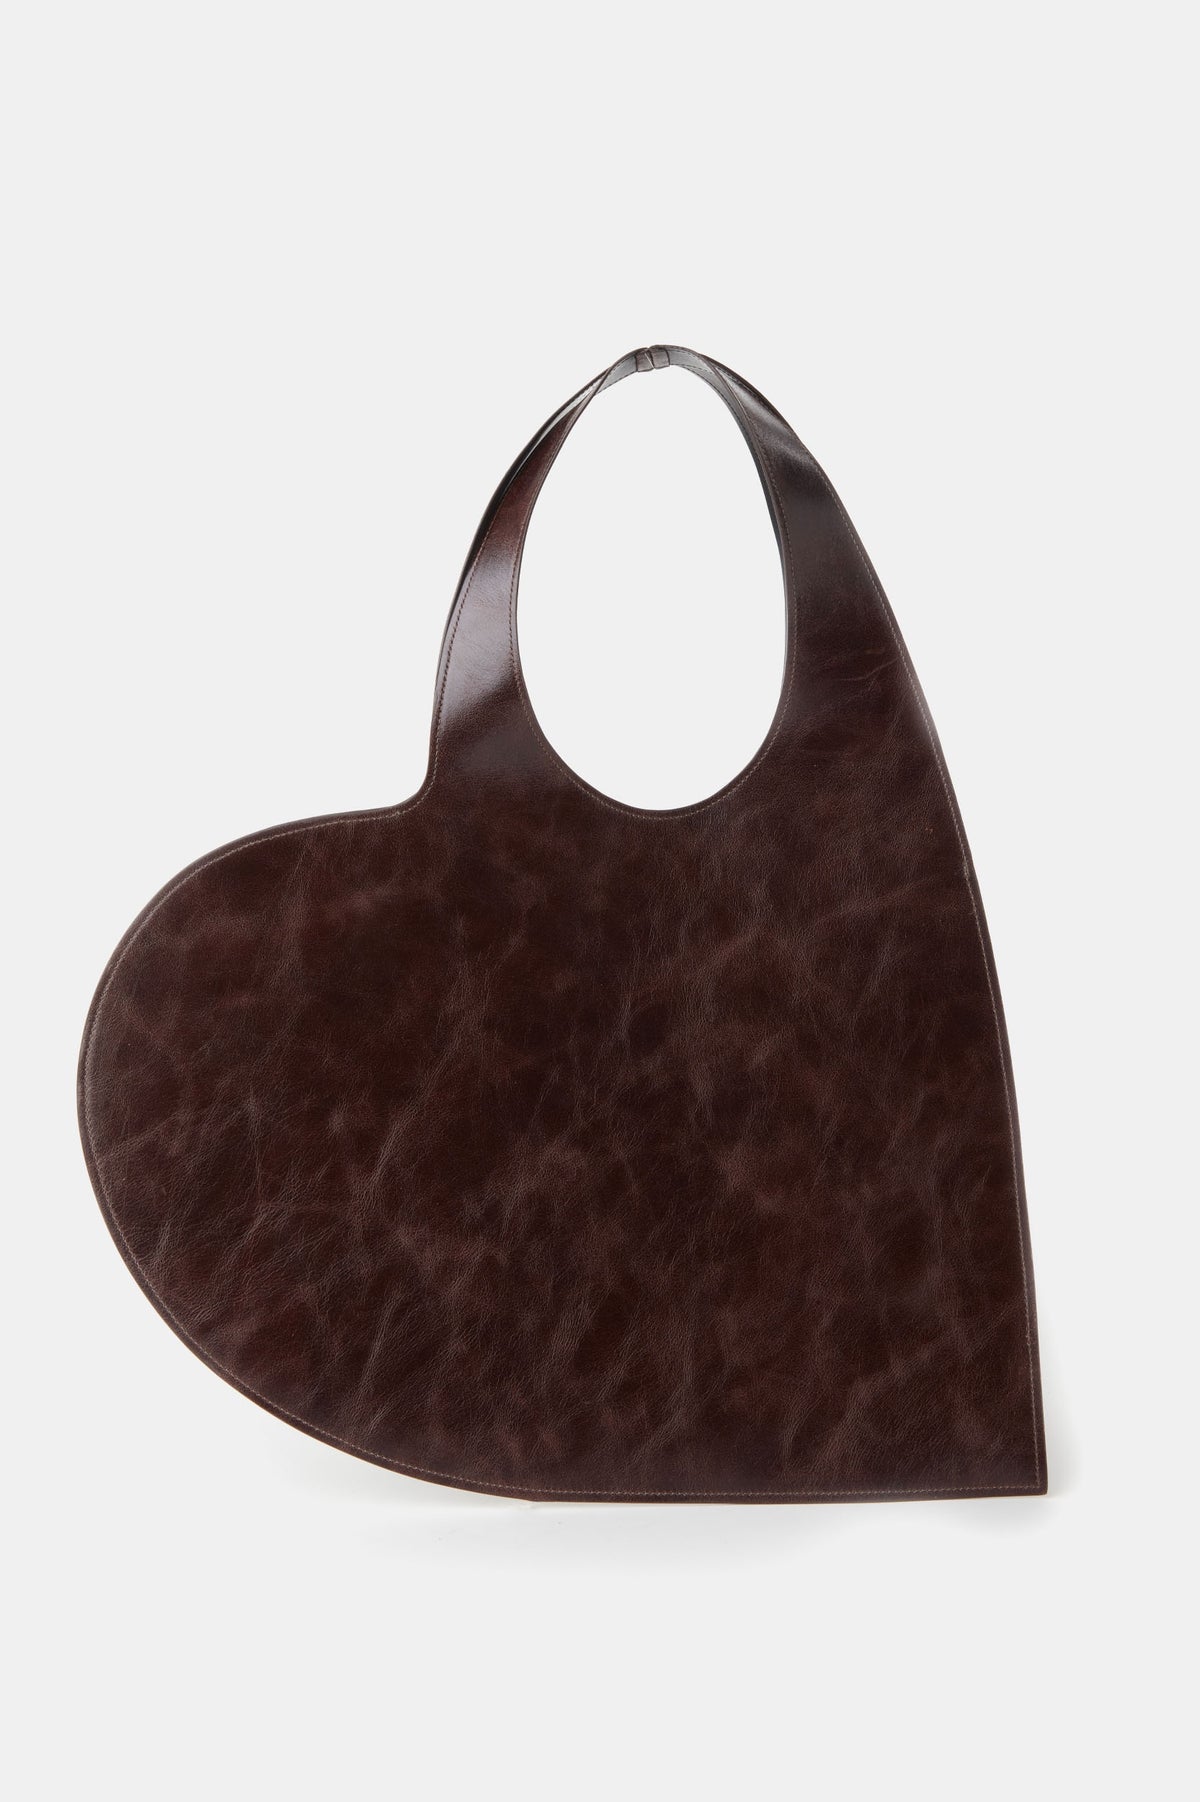 Heart Tote Bag in Brown